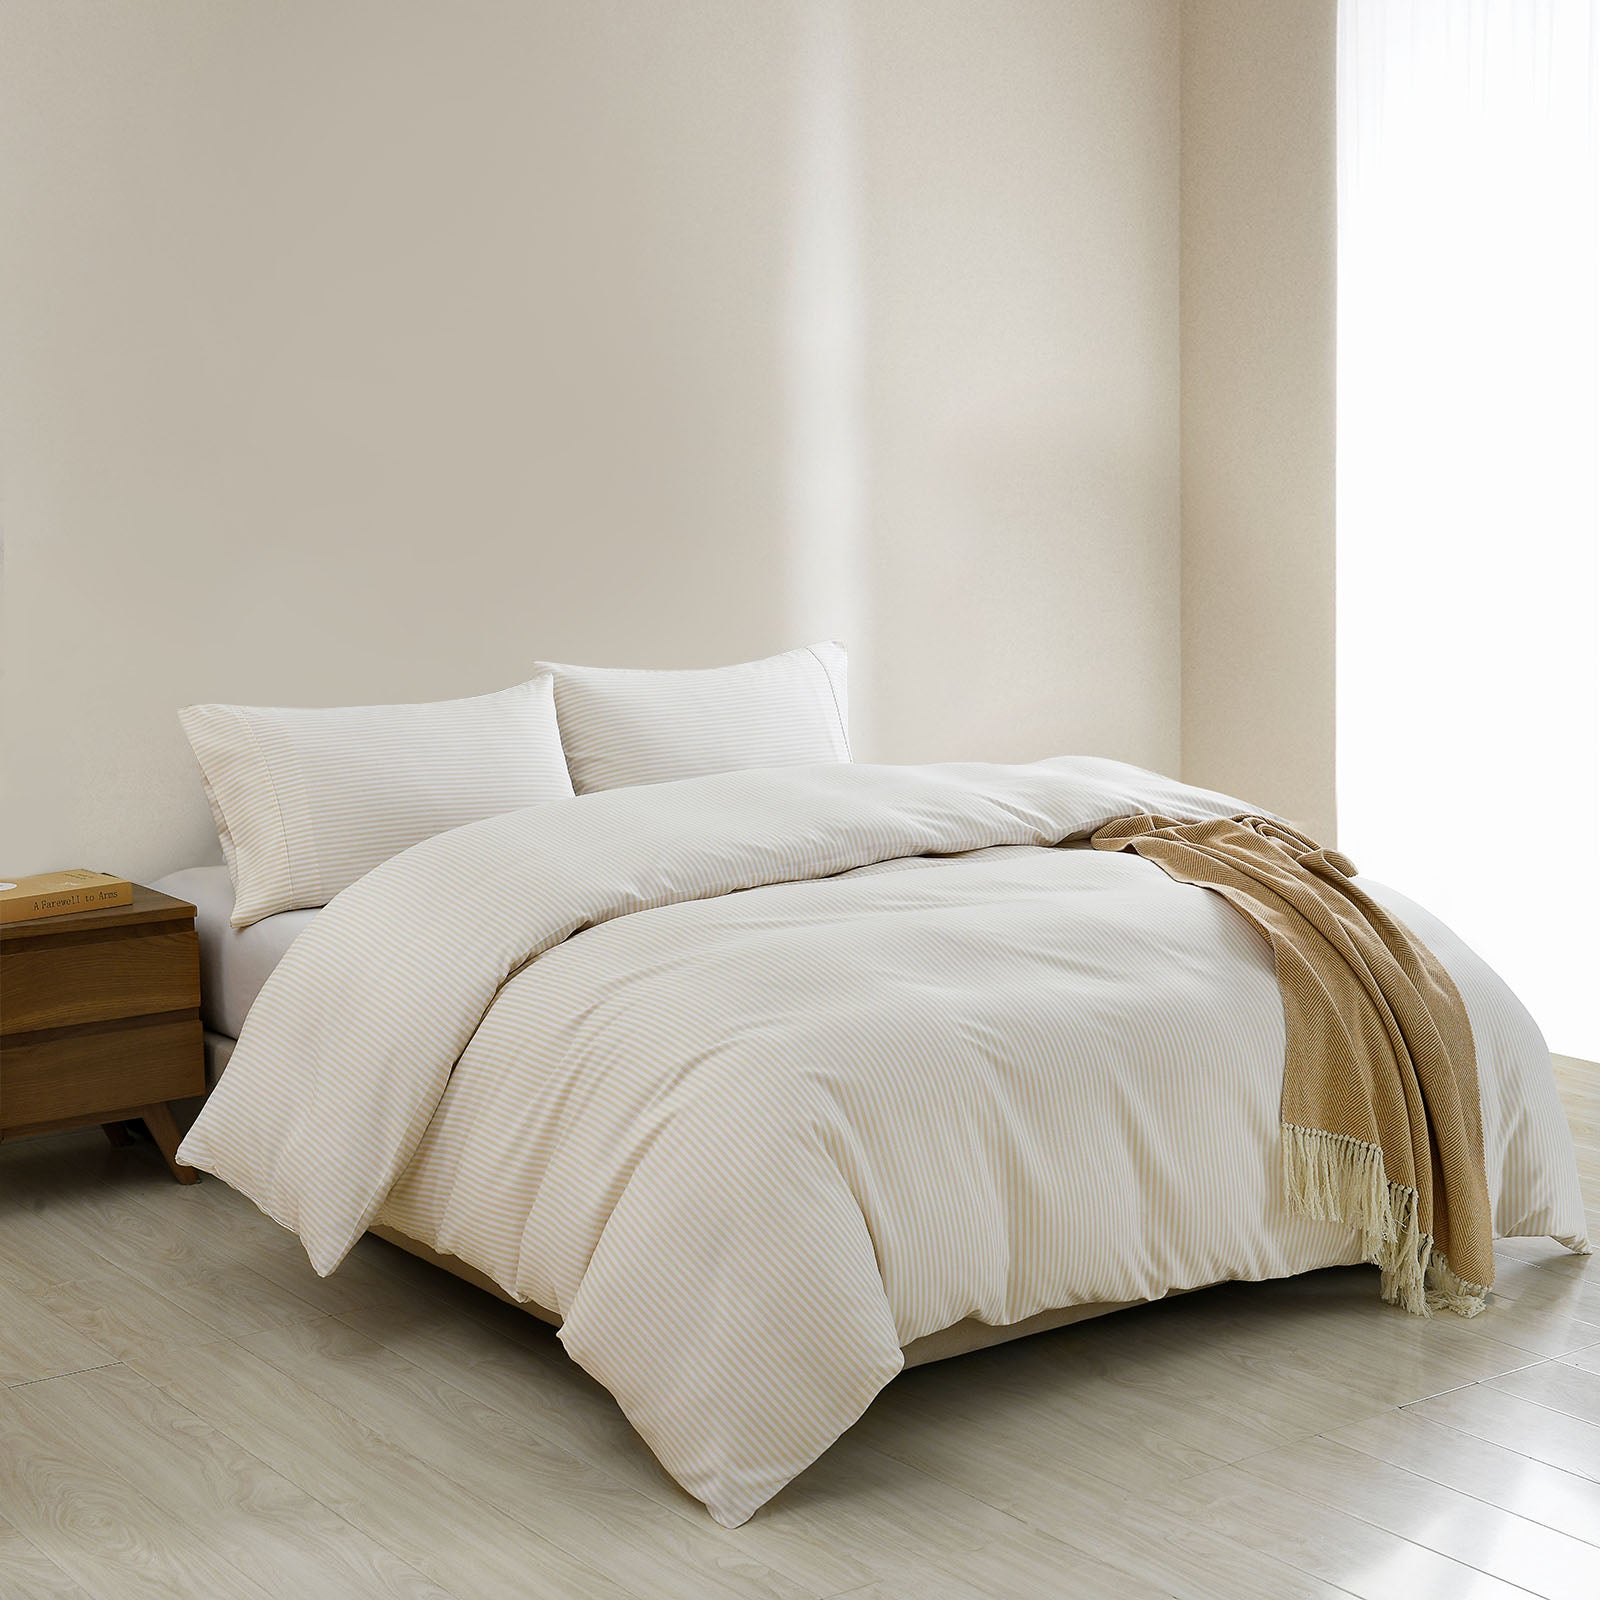 Royal Comfort Striped Flax Linen Blend Quilt Cover Set Soft Touch Bedding - Queen - Beige from Deals499 at Deals499